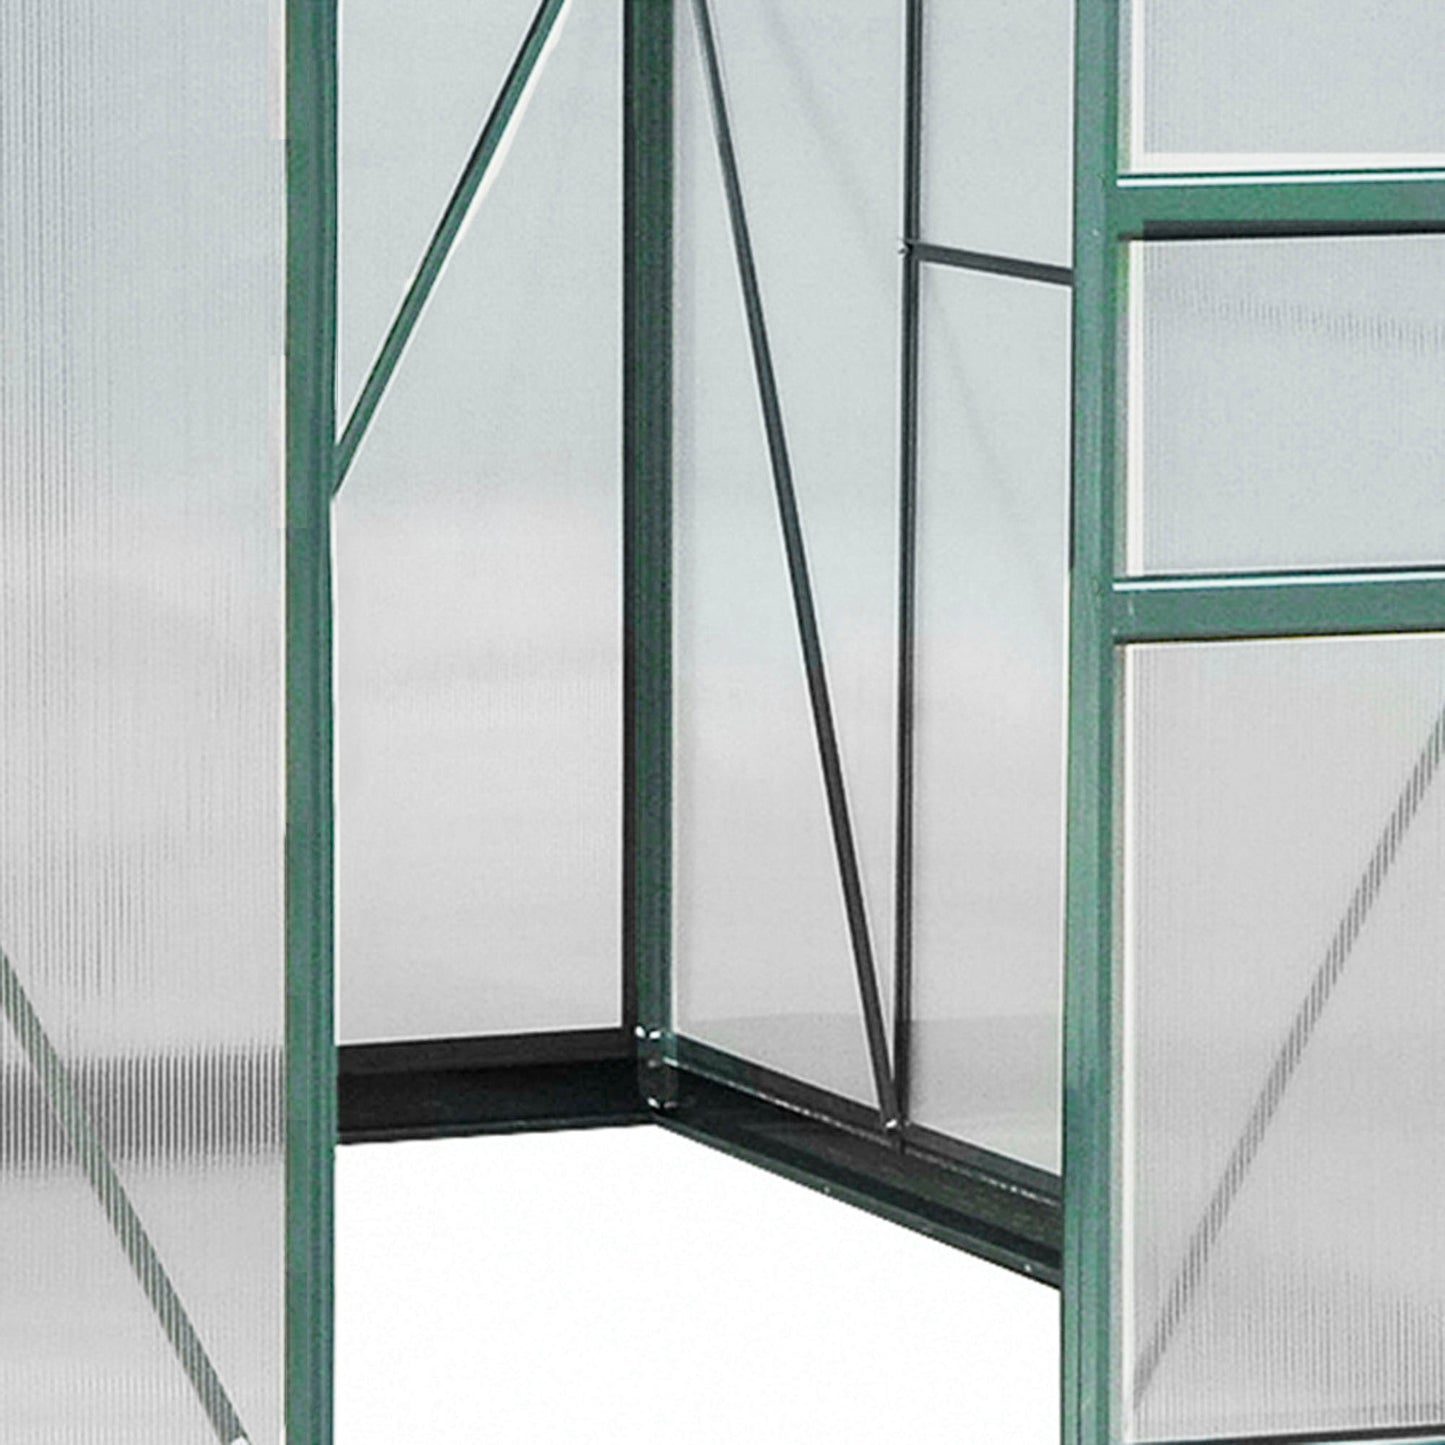 Outsunny Large Walk-In Greenhouse Aluminium Frame Greenhouse Garden Plants Grow Galvanized Base w/ Slide Door, 6 x 8 ft